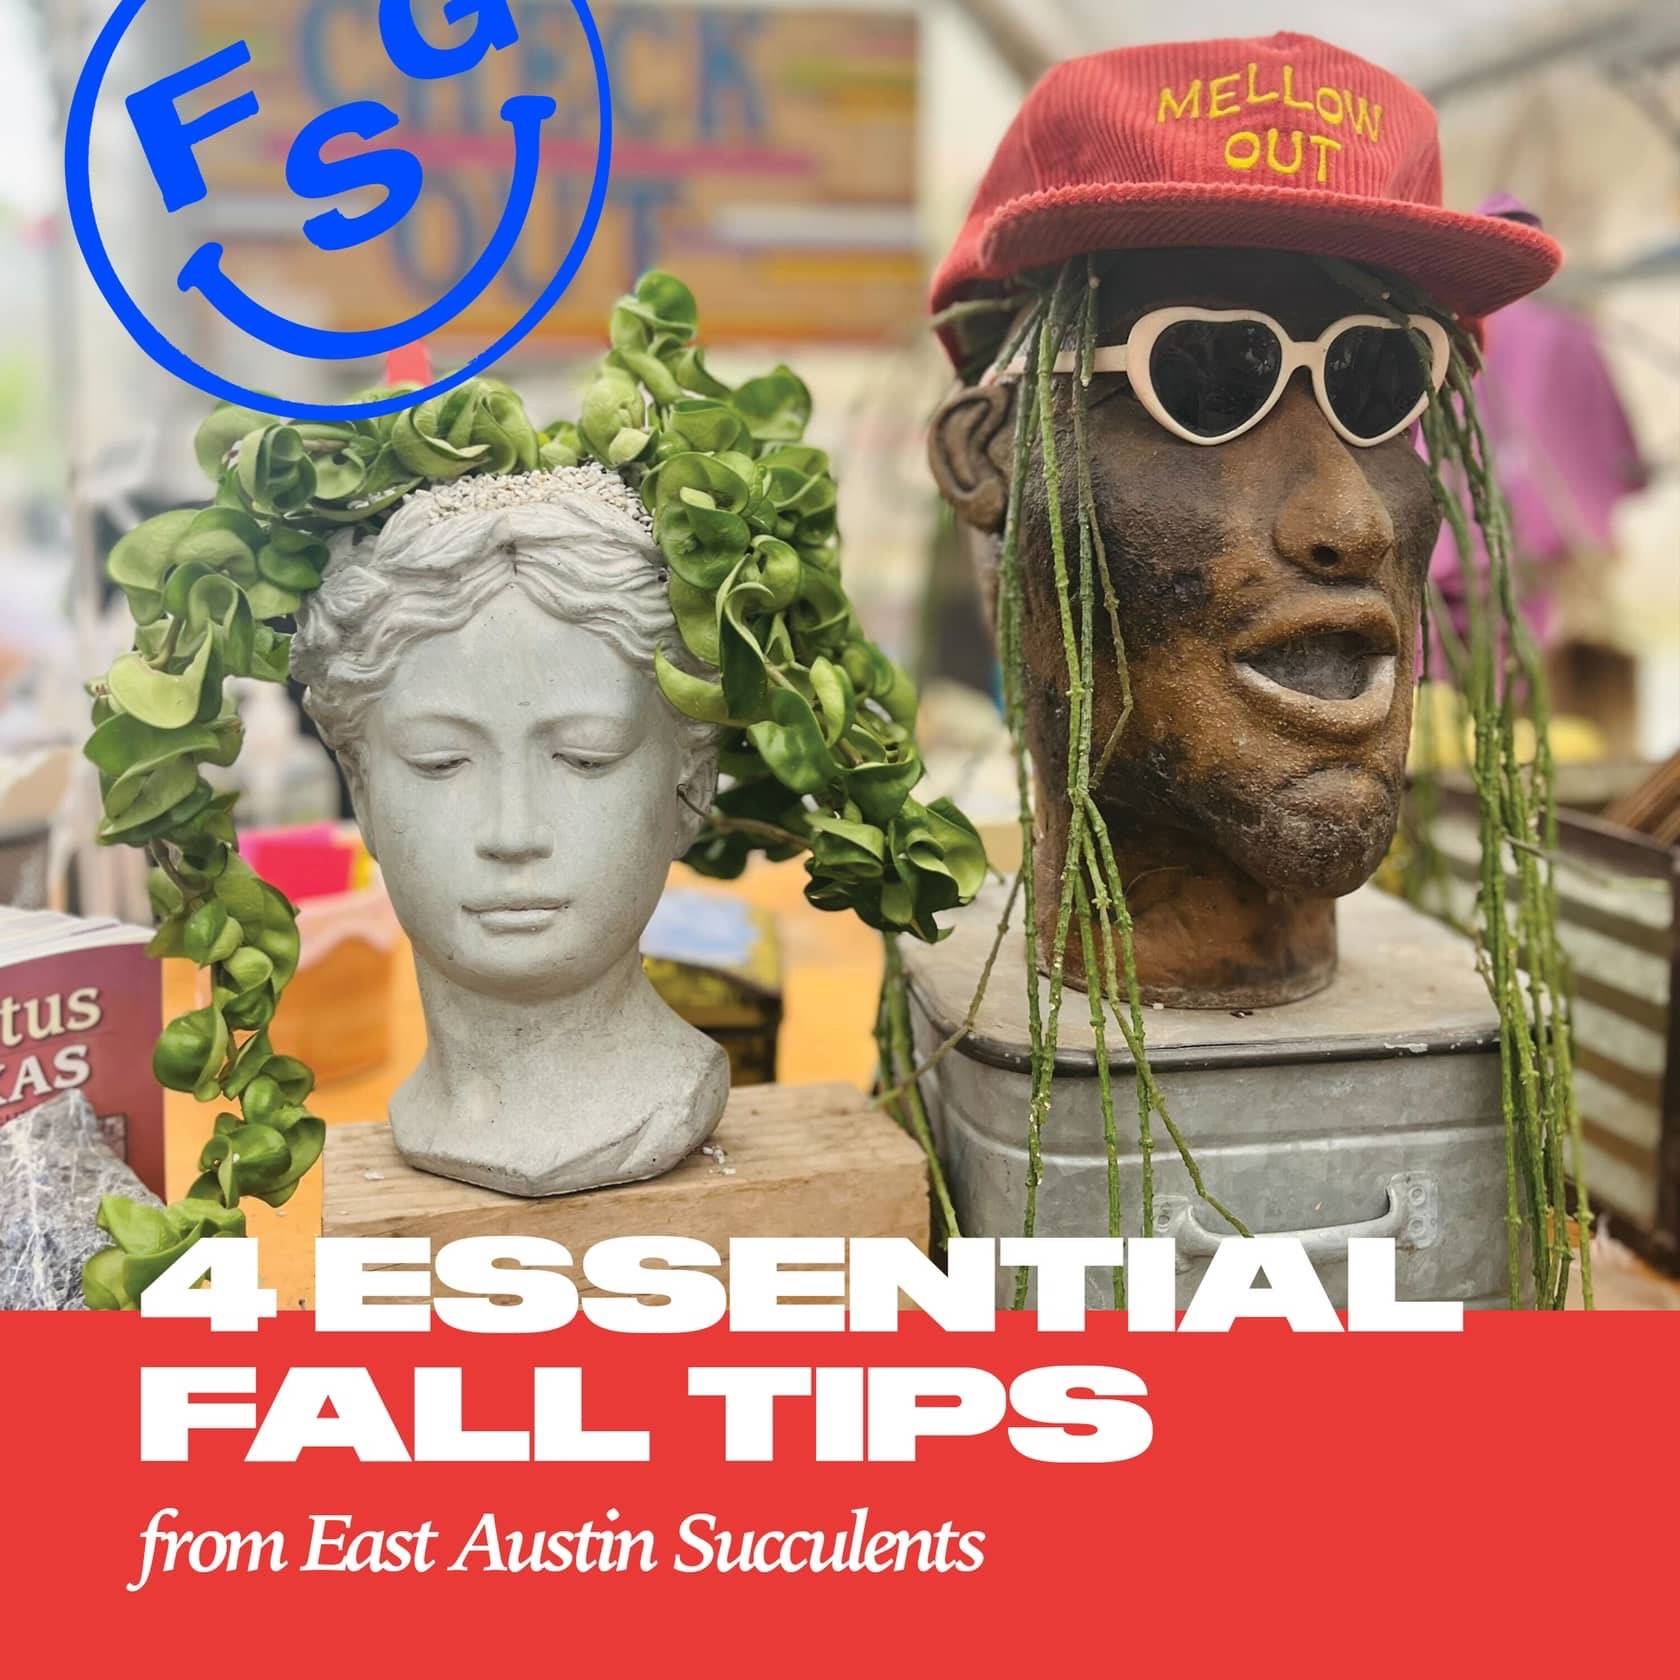 East Austin Succulents, Plant Tips, What's Good?, E.S. Sparks